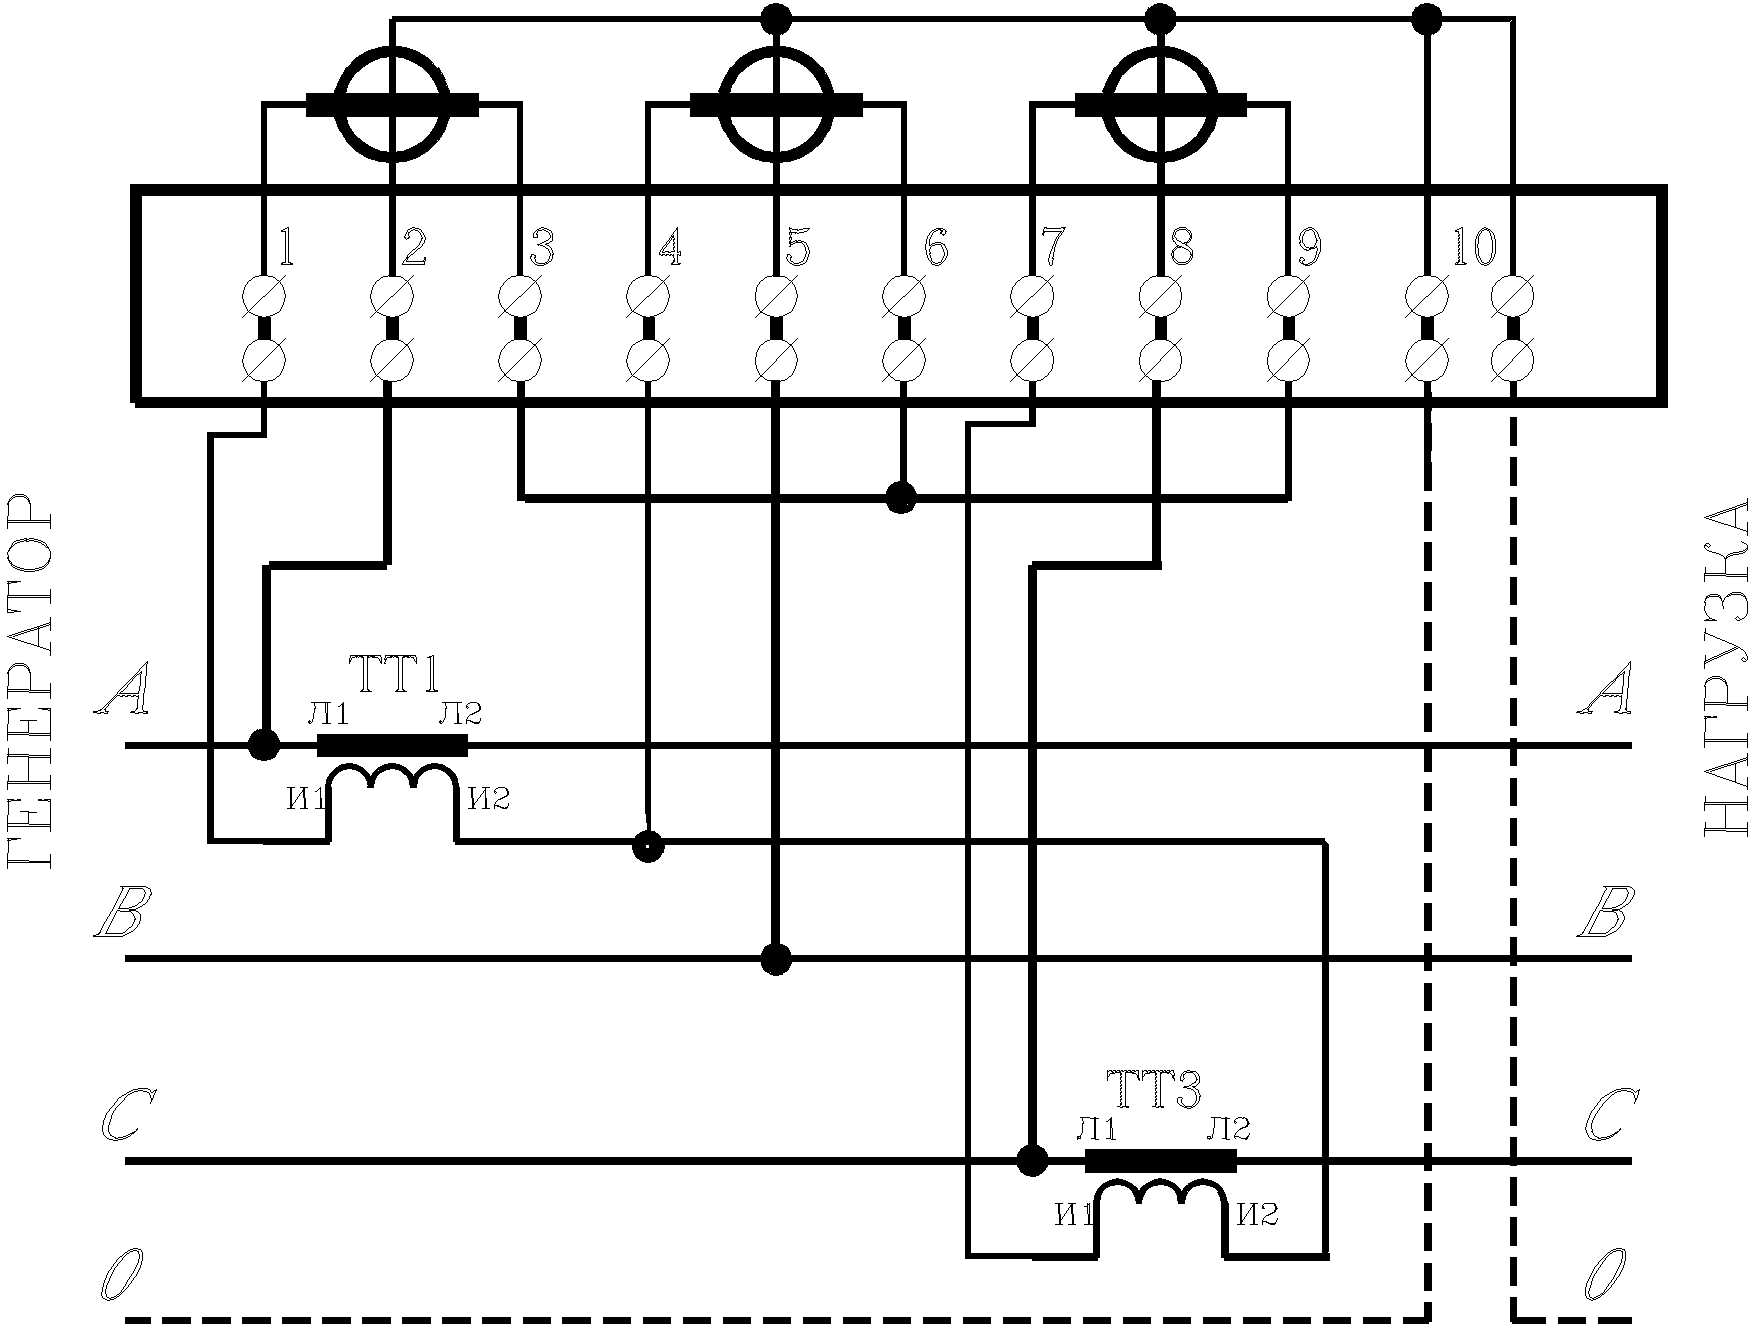 Схема подключения трехфазного счетчика через трансформаторы тока. Схема подключения счетчика через 2 трансформатора тока. Схема подключения счетчика через трансформаторы тока 0.4кв. Схема соединения 3х фазного счетчика с трансформаторами тока.